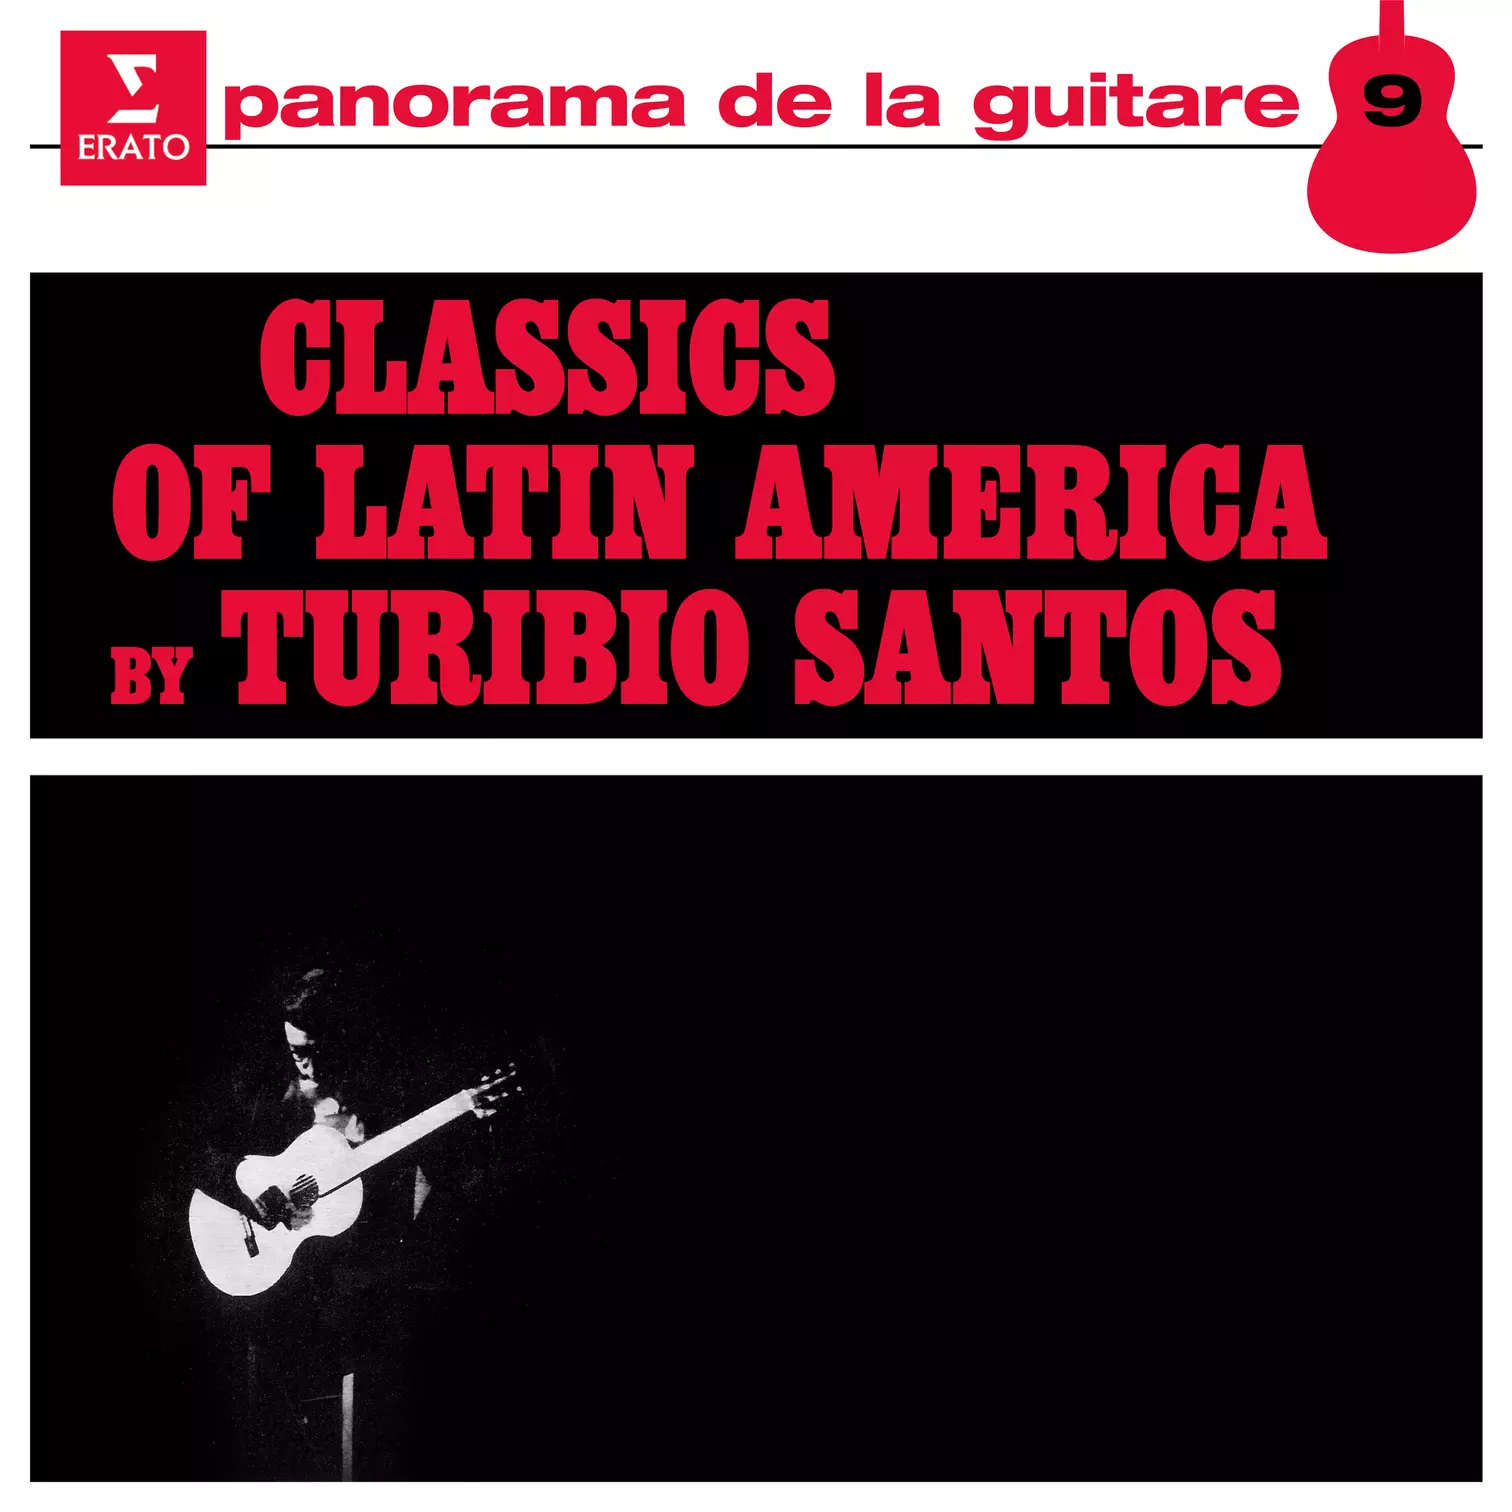 Turibio Santos Classics of Latin America